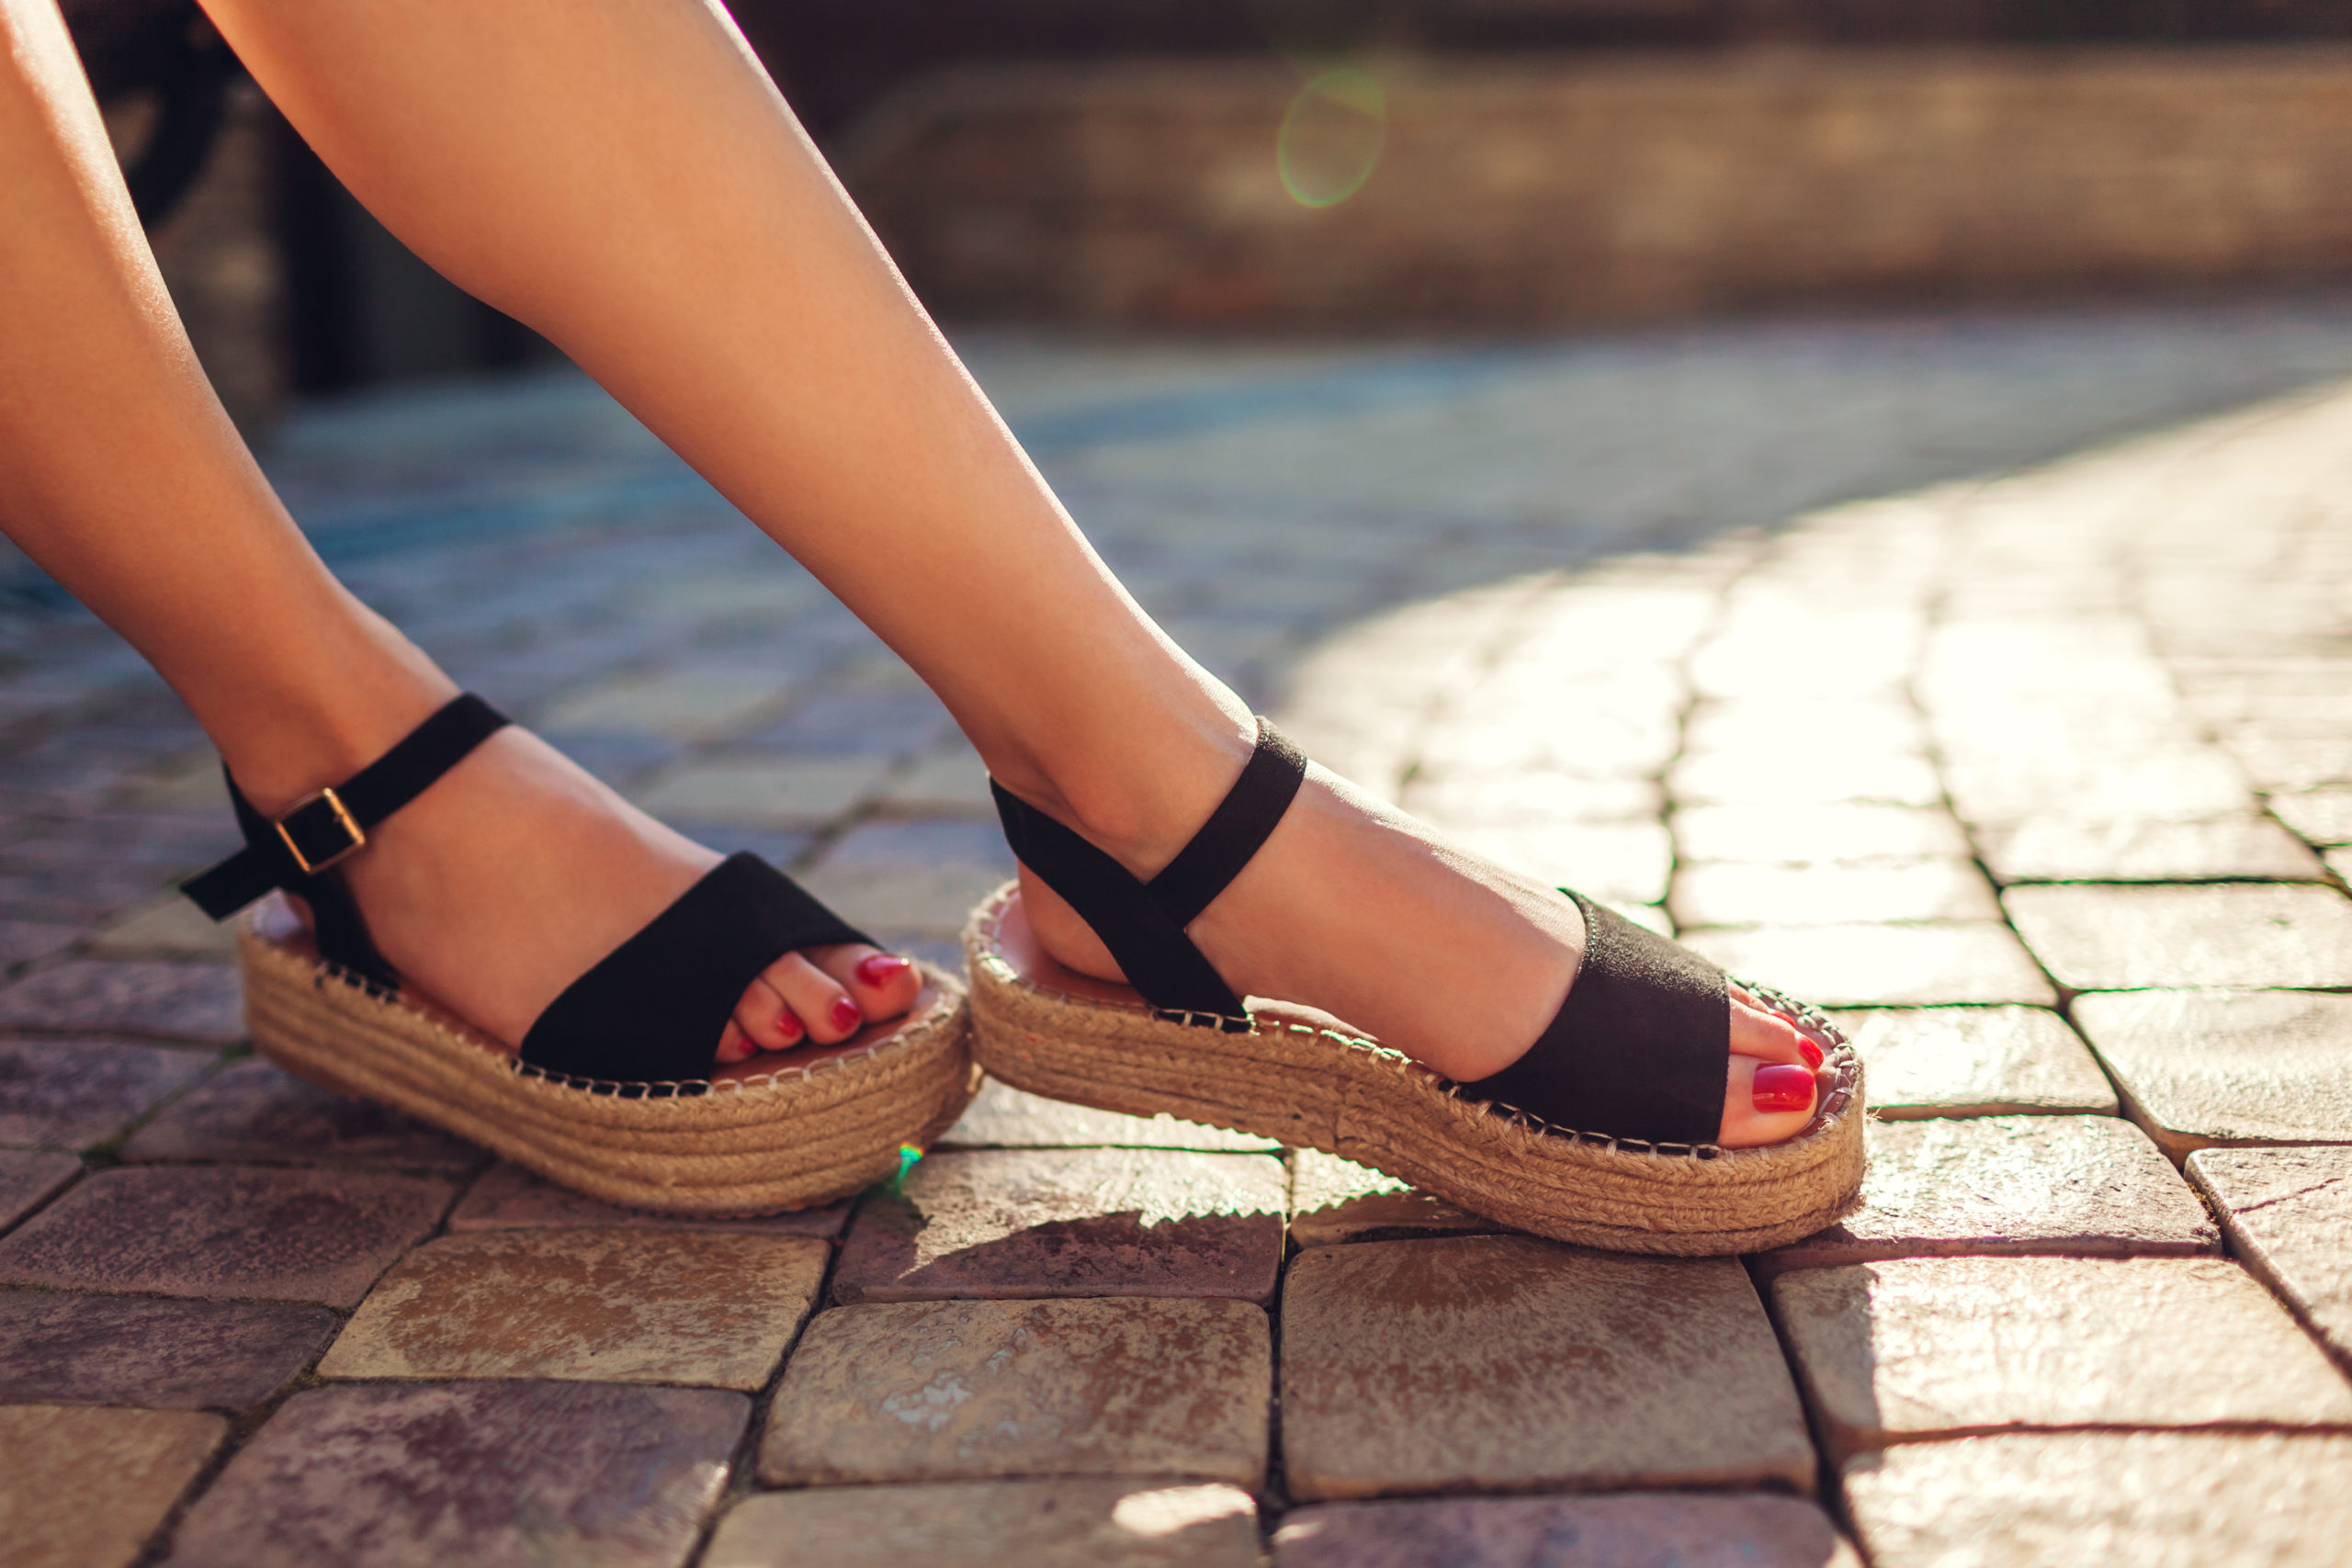 Image - feet in sandals: Mariia Boiko/shutterstock